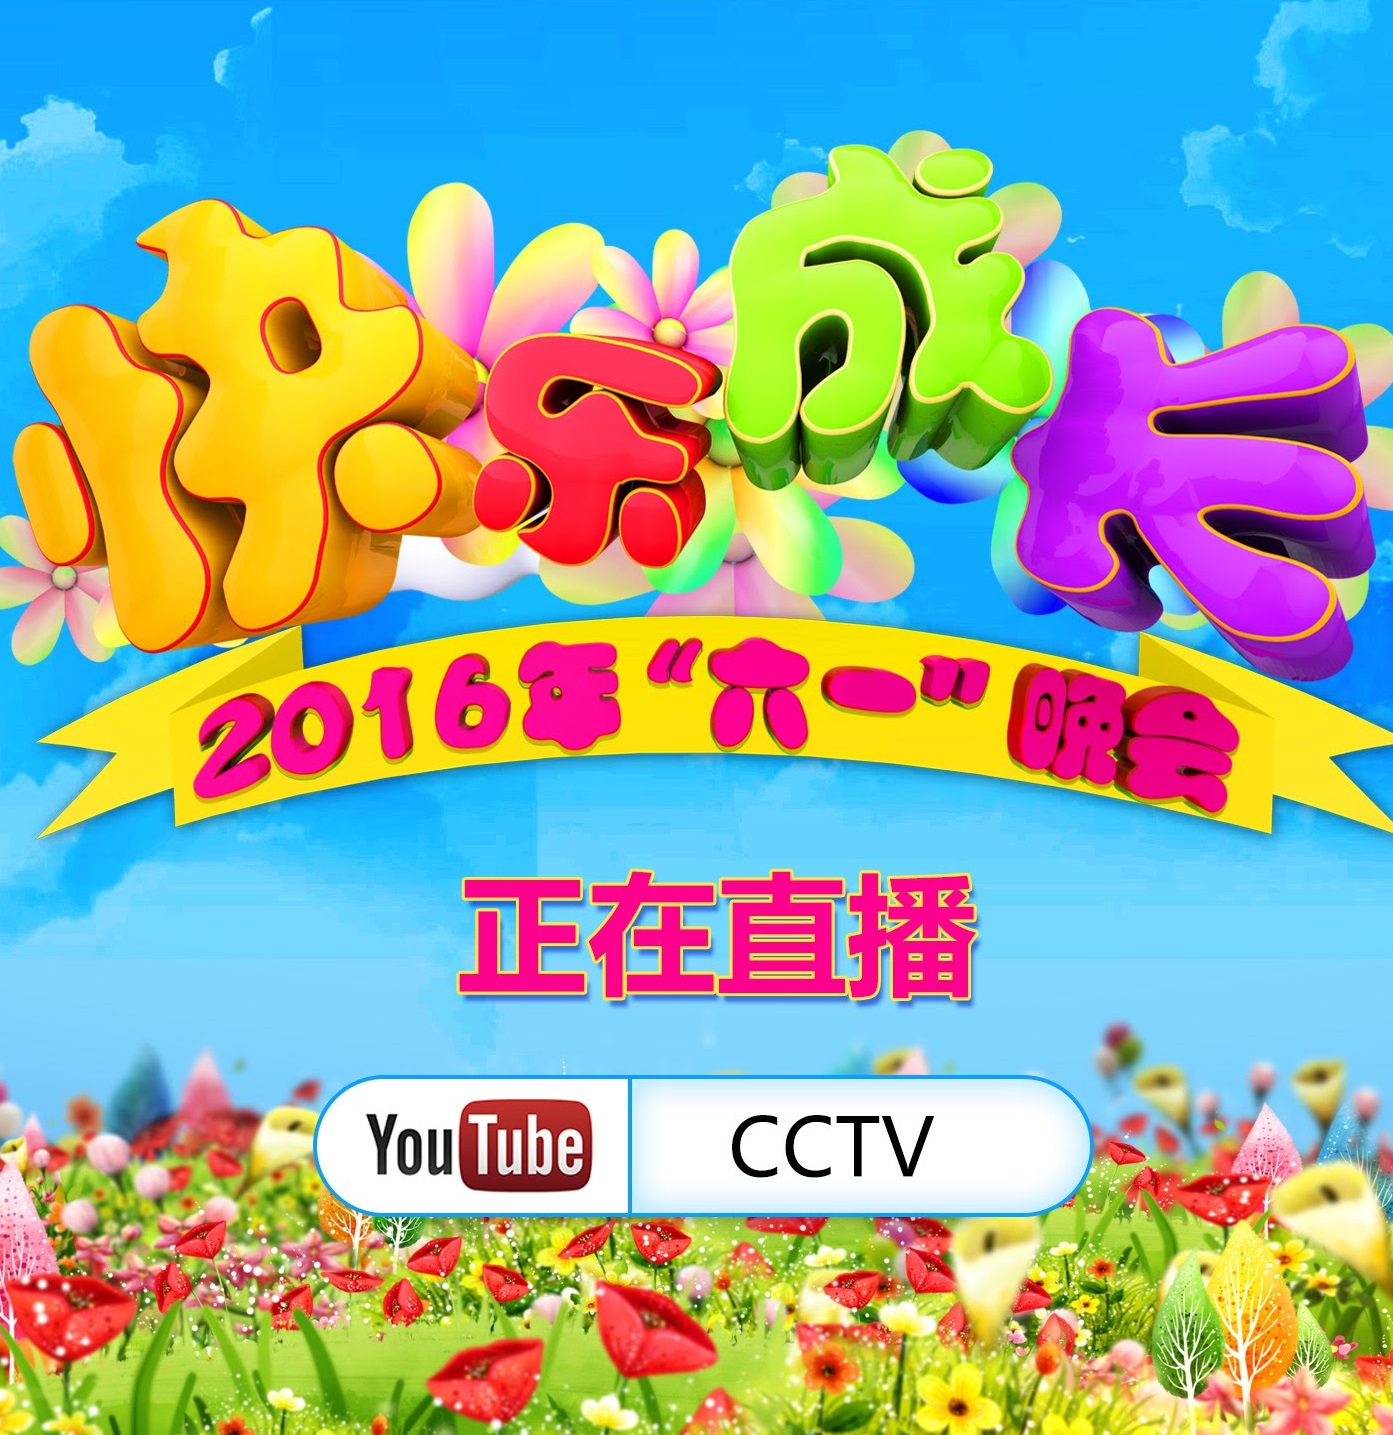 <strong>2016央视“六一”晚会《快乐成长》 | CCTV</strong>综艺